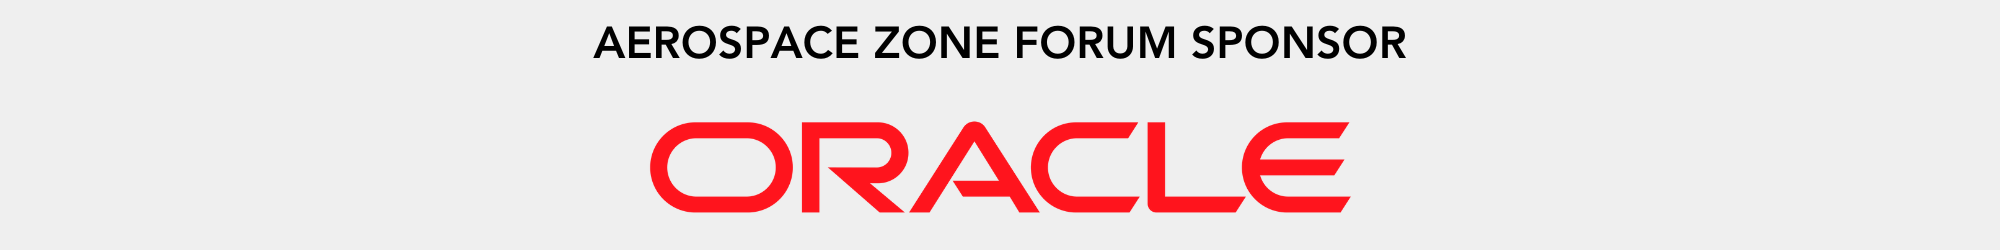 Oracle are the Aerozone Zone Forum Sponsor